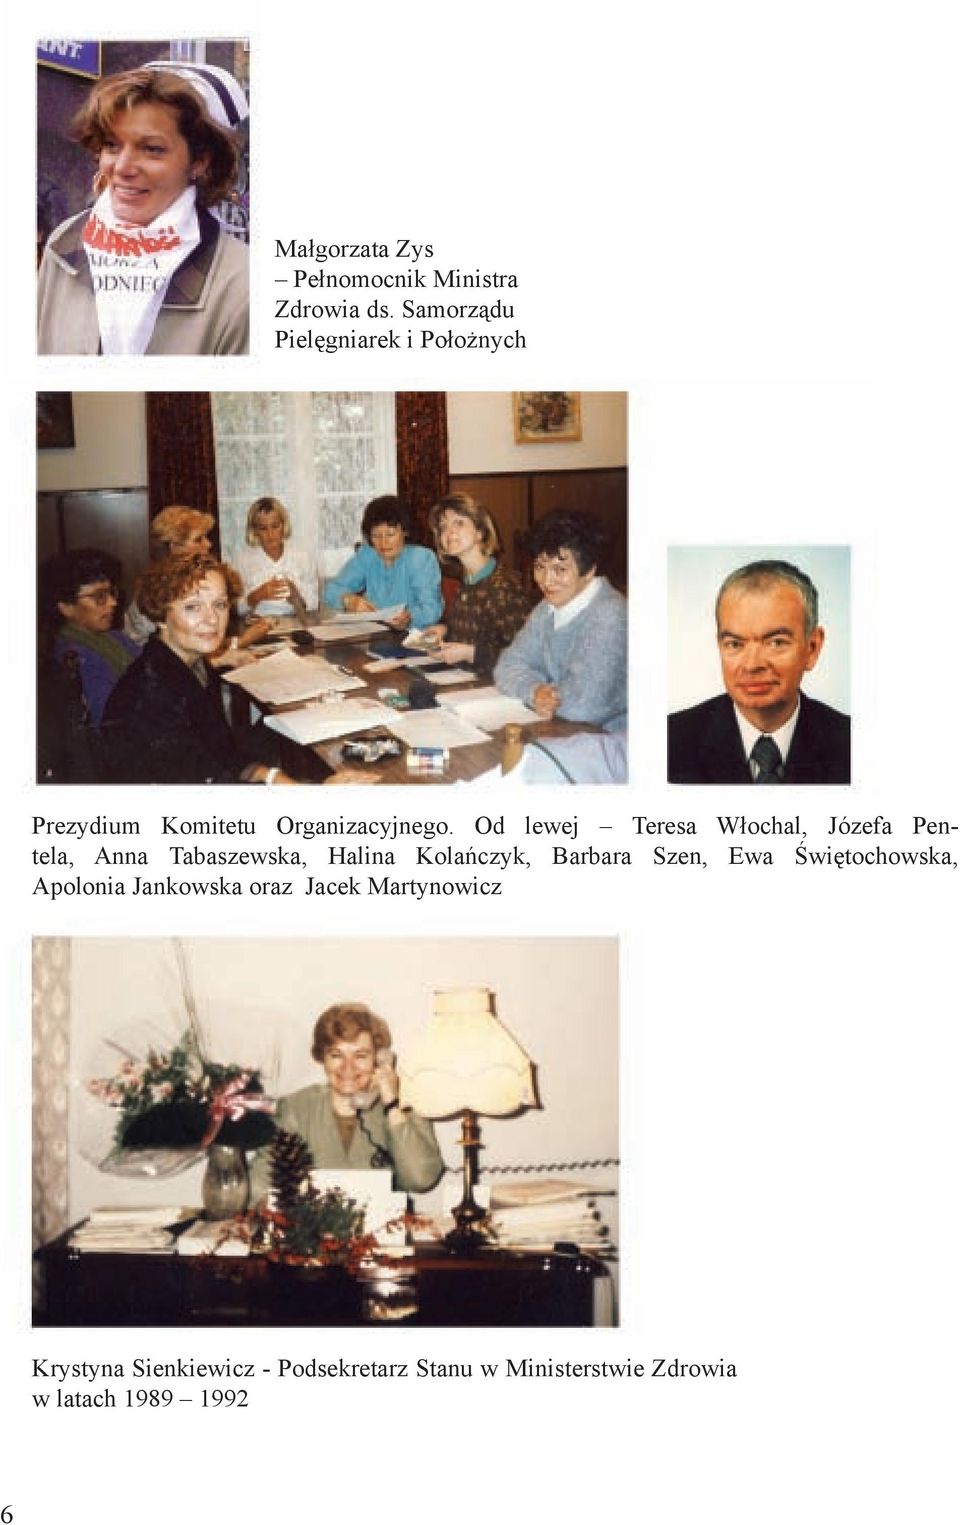 Od lewej Teresa Włochal, Józefa Pentela, Anna Tabaszewska, Halina Kolańczyk, Barbara